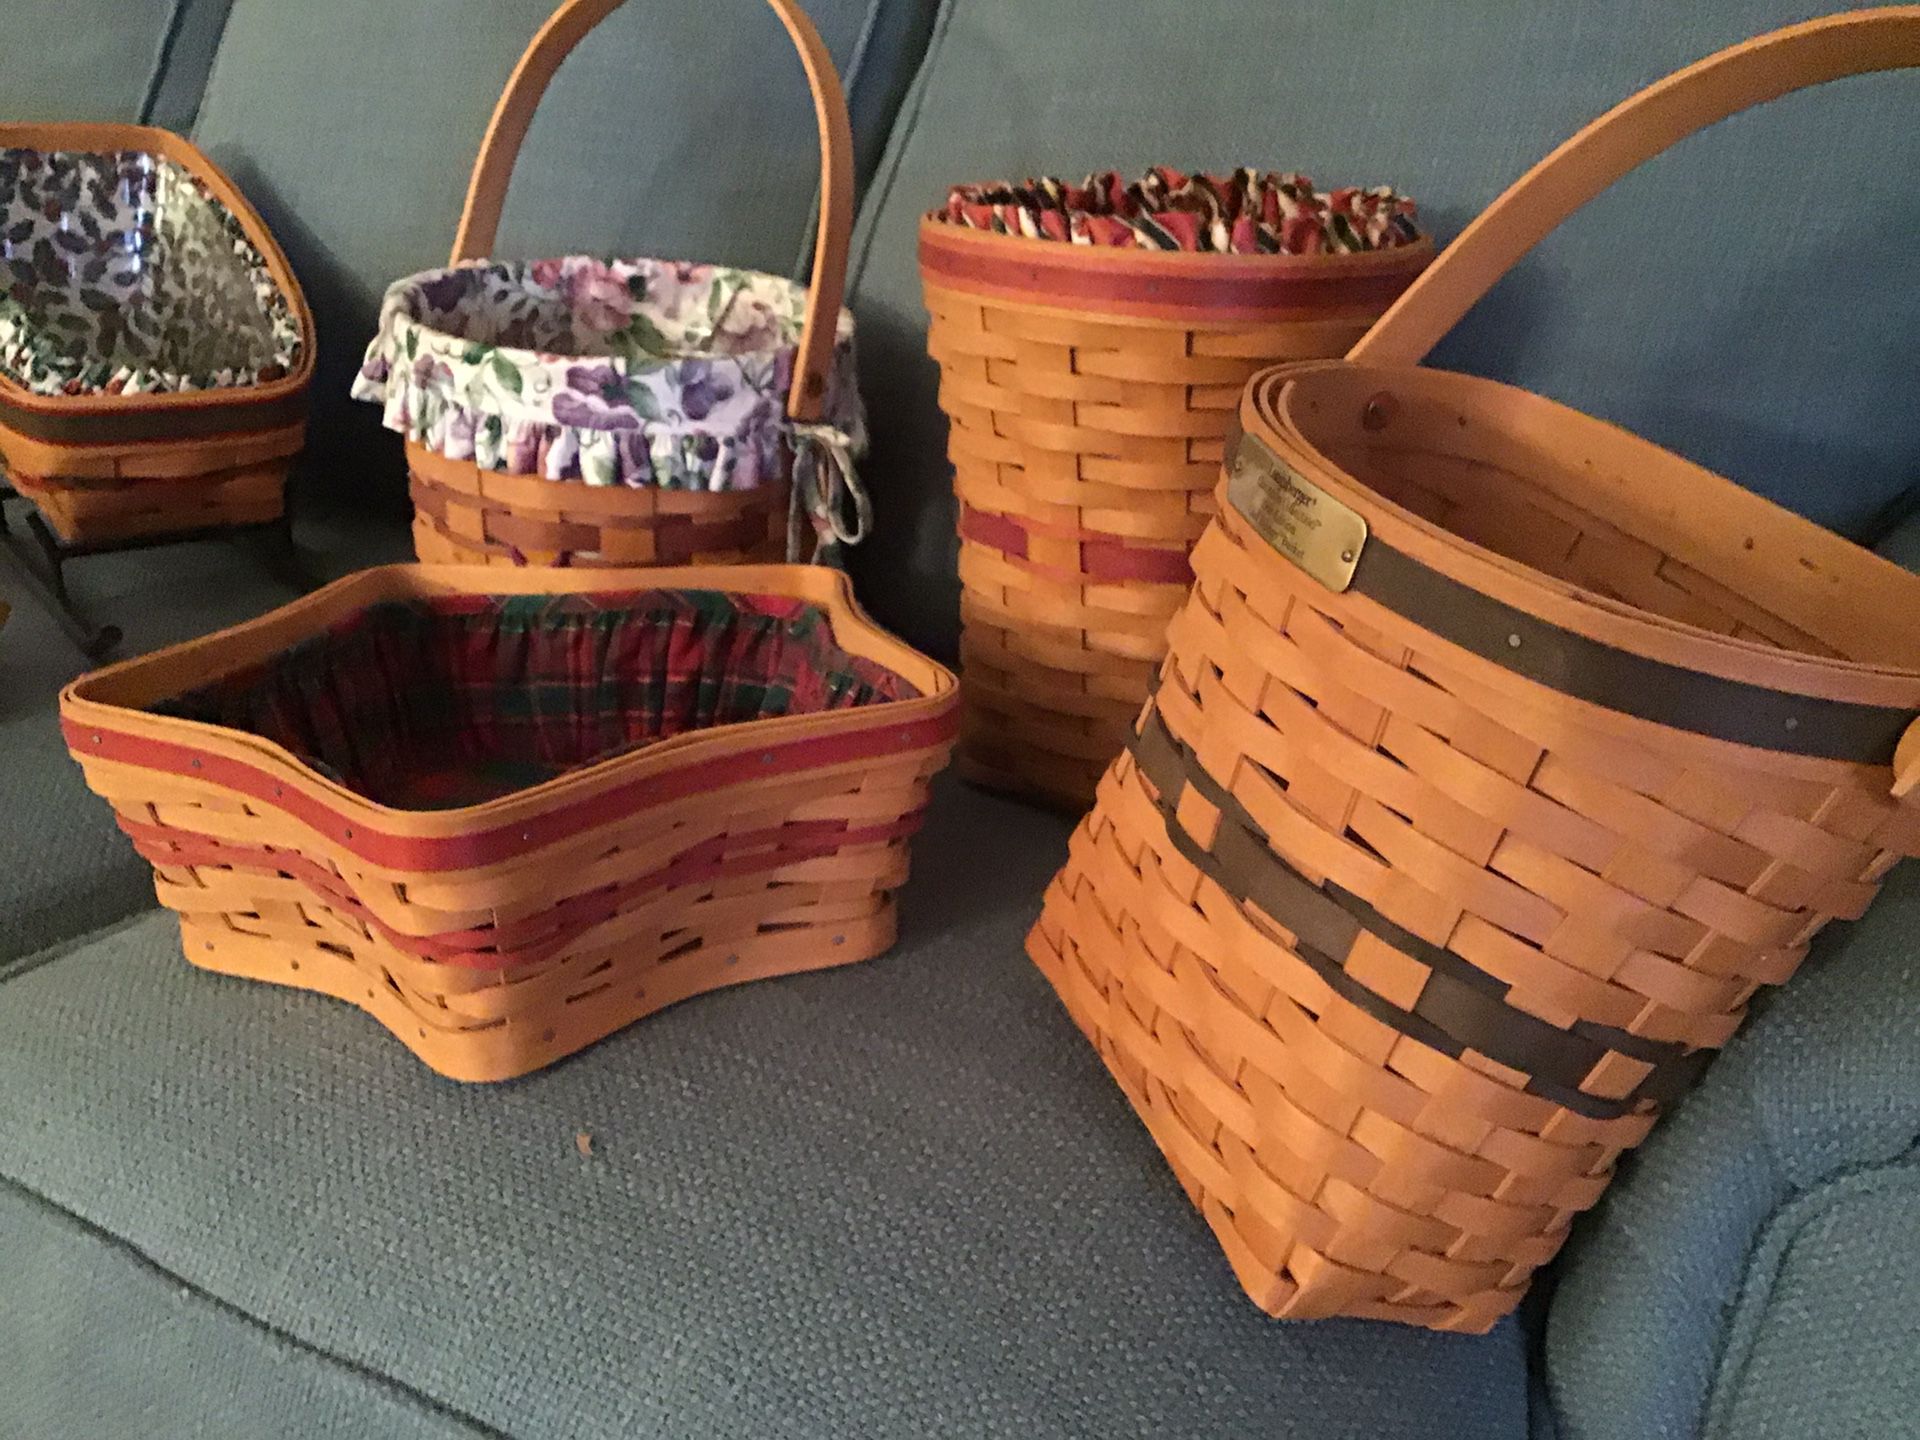 Longaberger basket collection